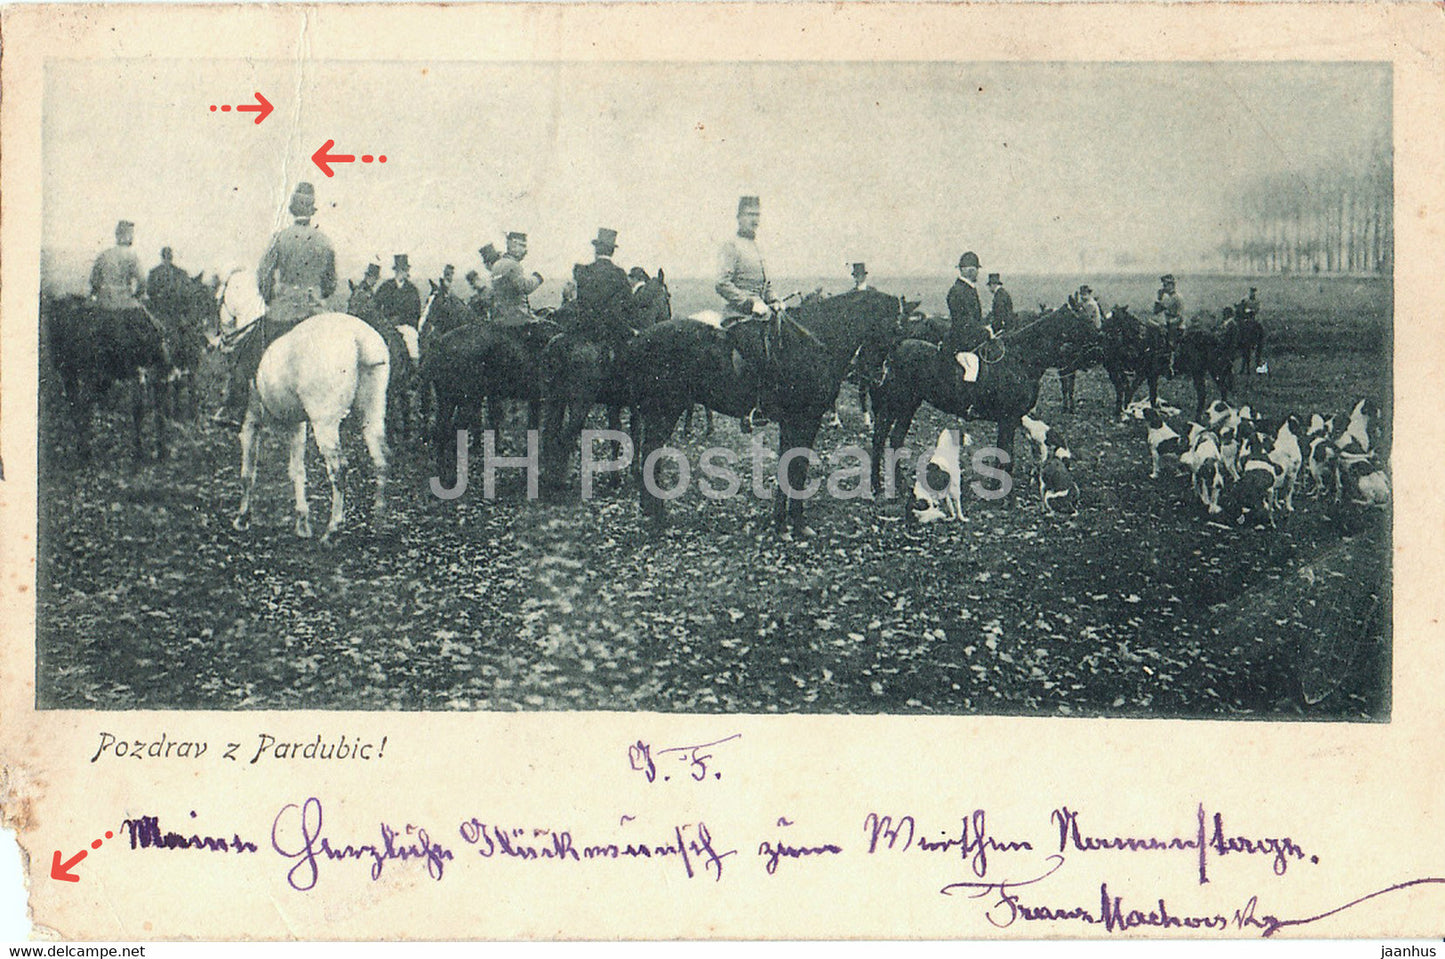 Pzdrav z Pardubic - Pardubice - hunt - horse - dog - - 1898 -old postcard - Czech Republic - used - JH Postcards